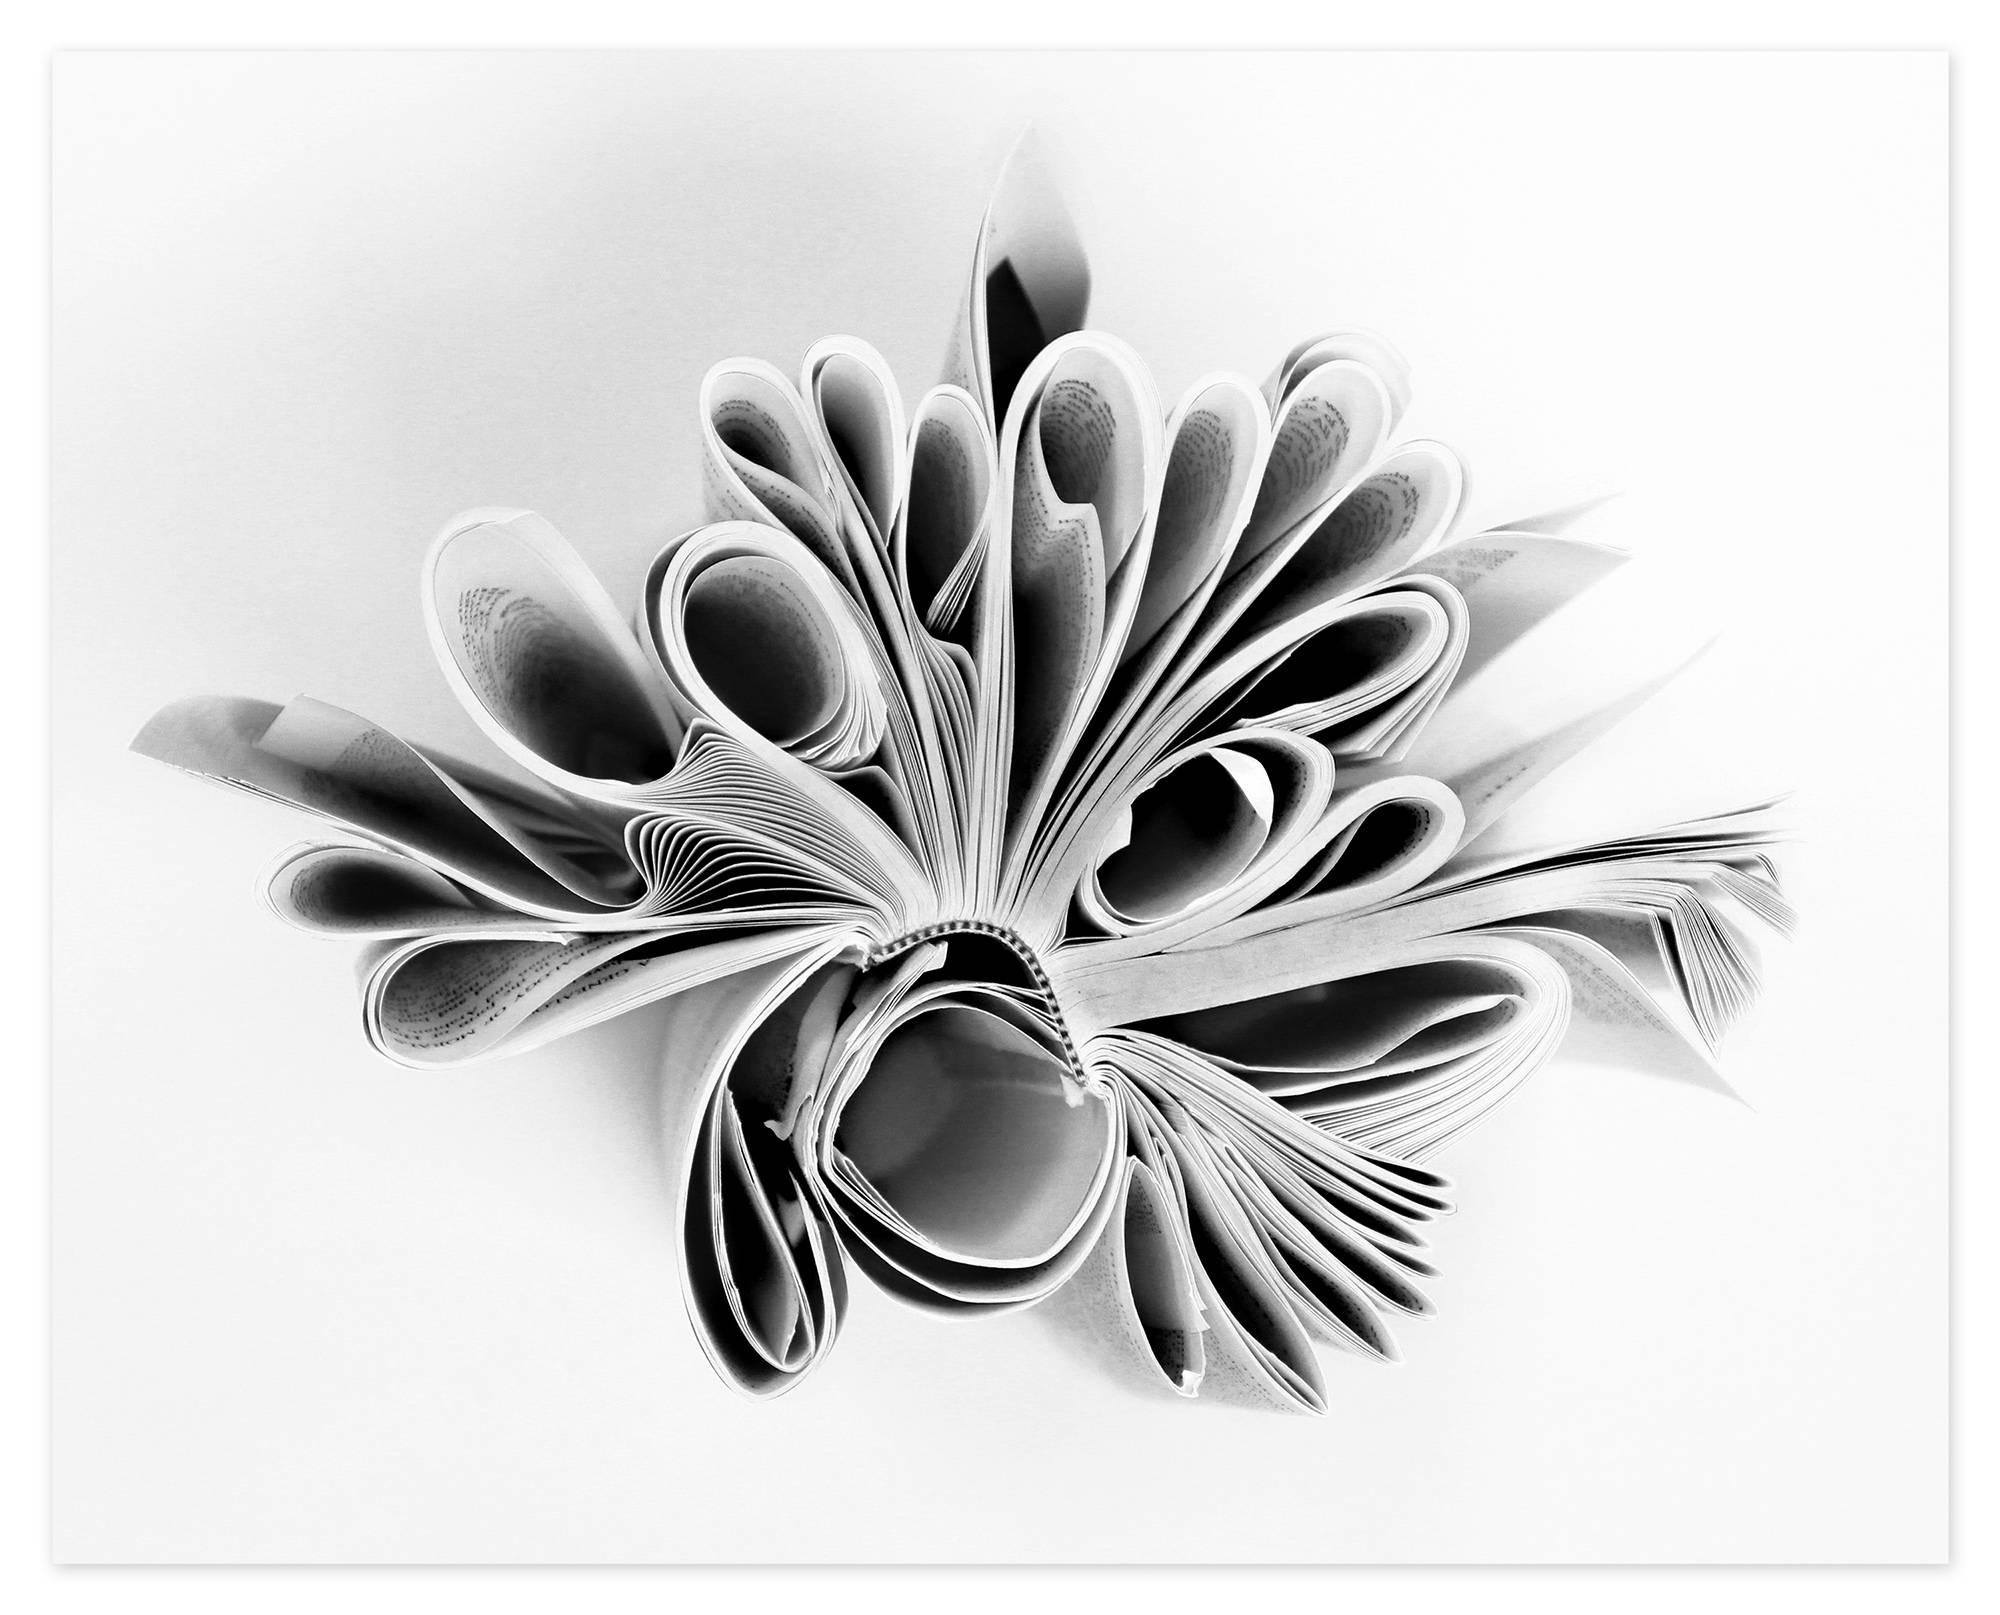 Alex Vignoli Black and White Photograph - Peacock's Show (Photo, Limited Edition Print, #5 of 25, Black & White)